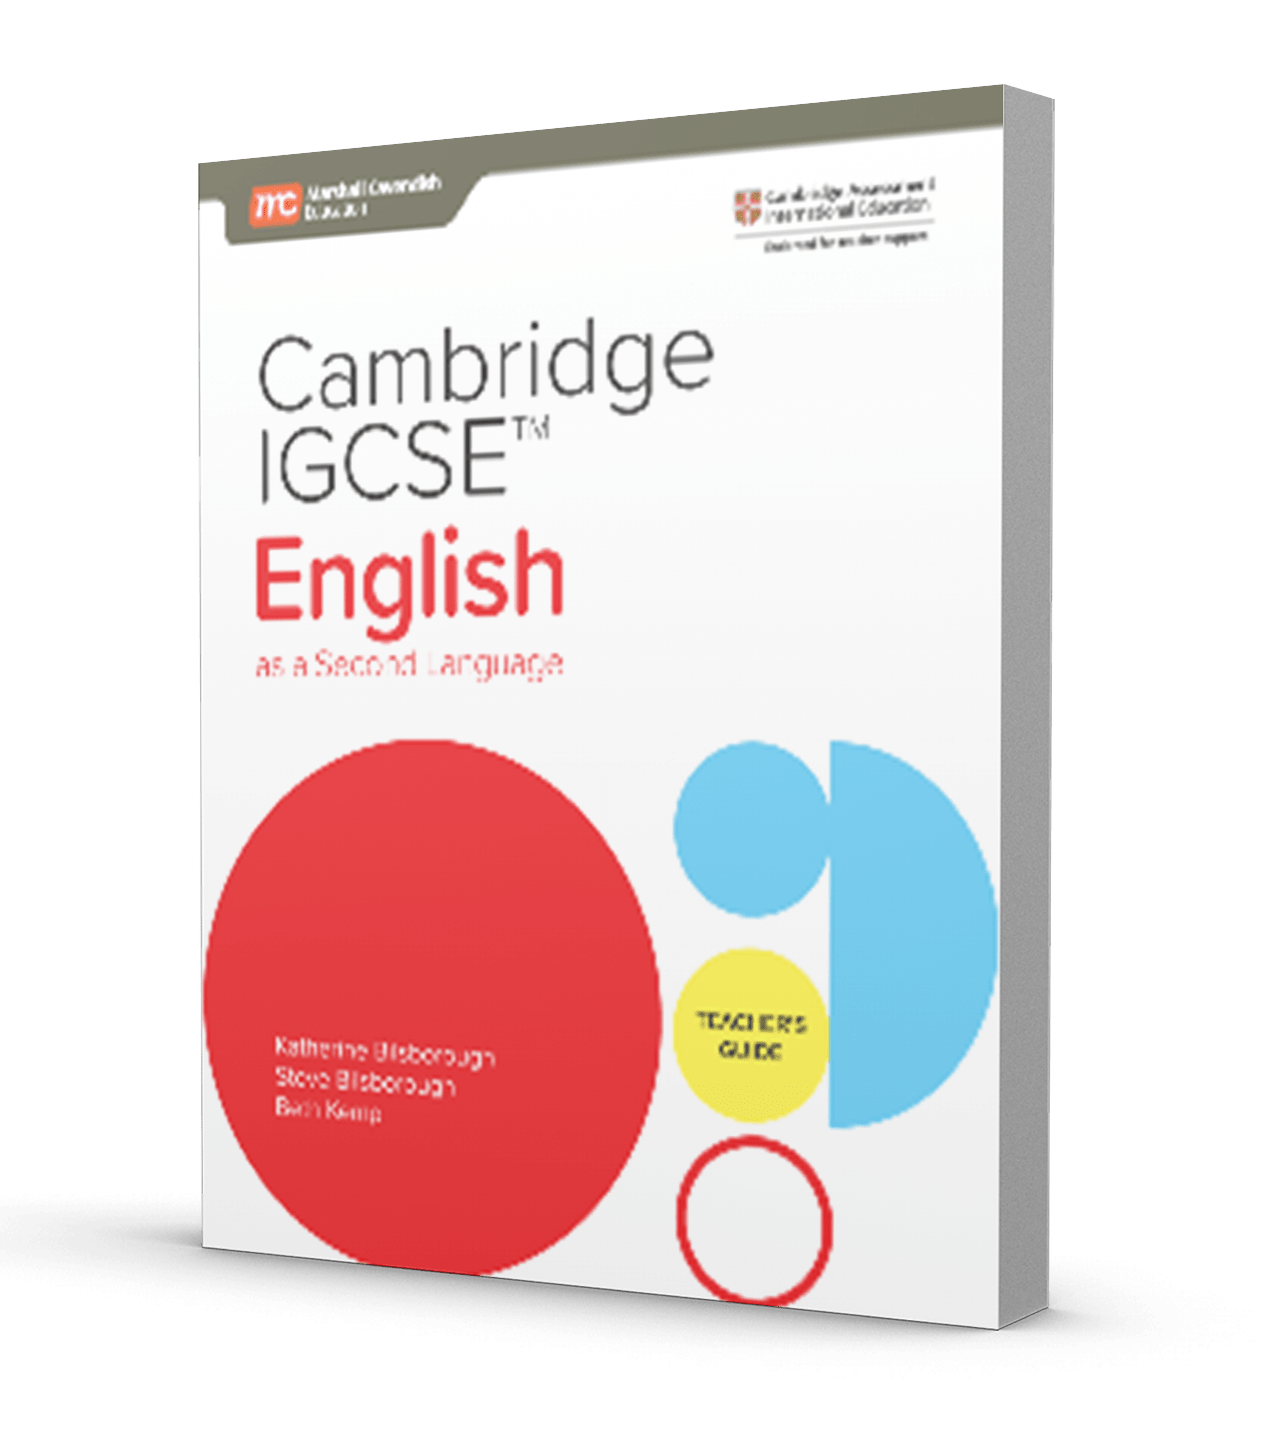 Cambridge IGCSE English as a Second Language Teacher's Guide